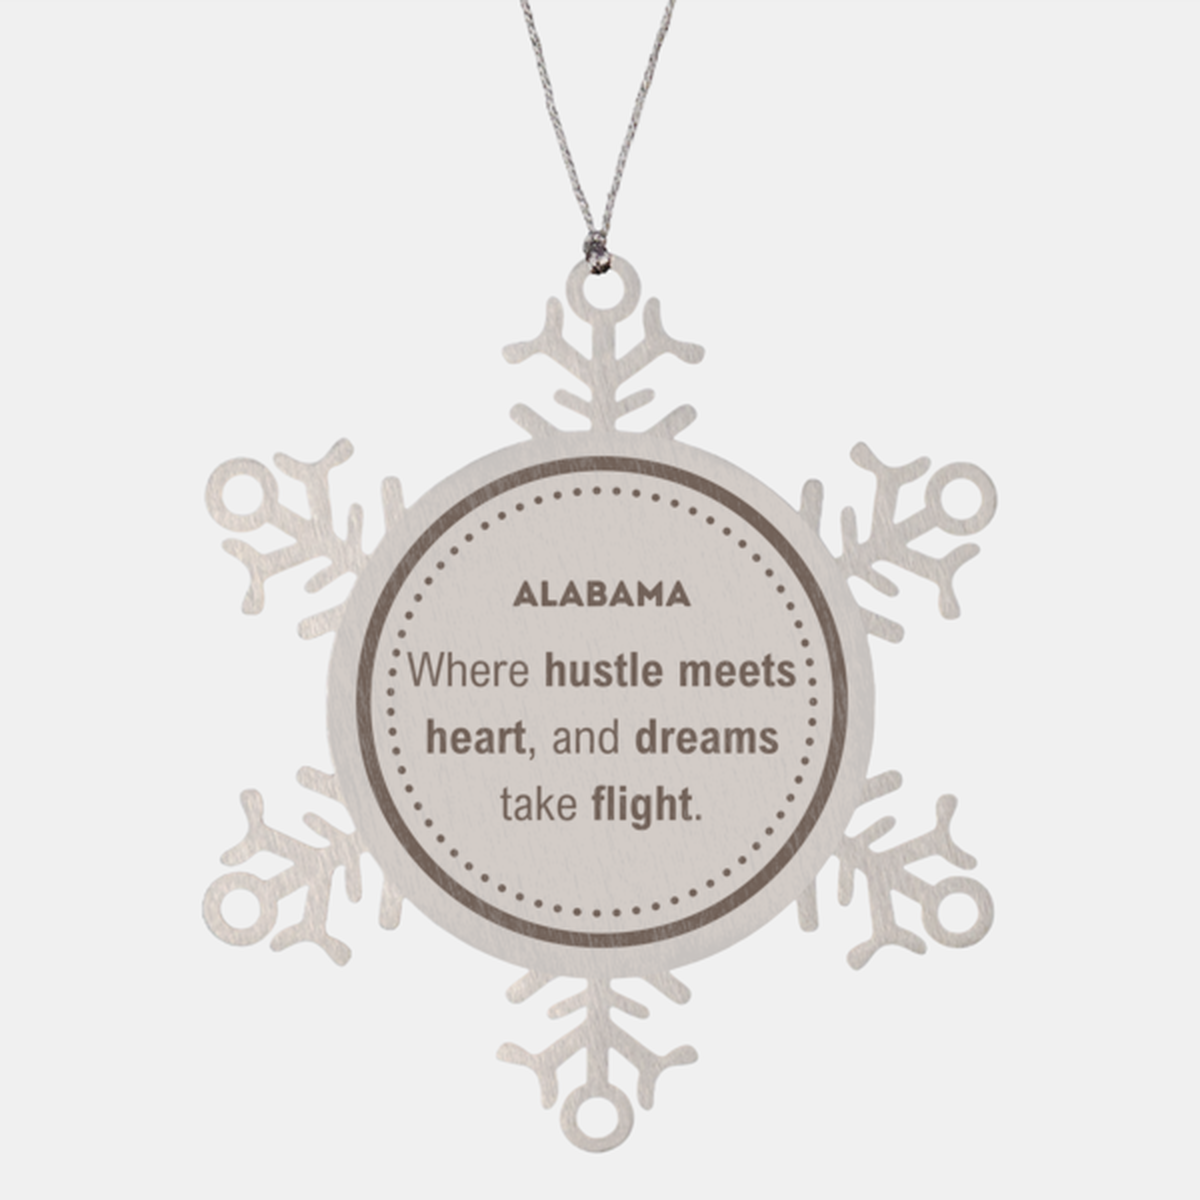 Alabama: Where hustle meets heart, and dreams take flight, Alabama Ornament Gifts, Proud Alabama Christmas Alabama Snowflake Ornament, Alabama State People, Men, Women, Friends